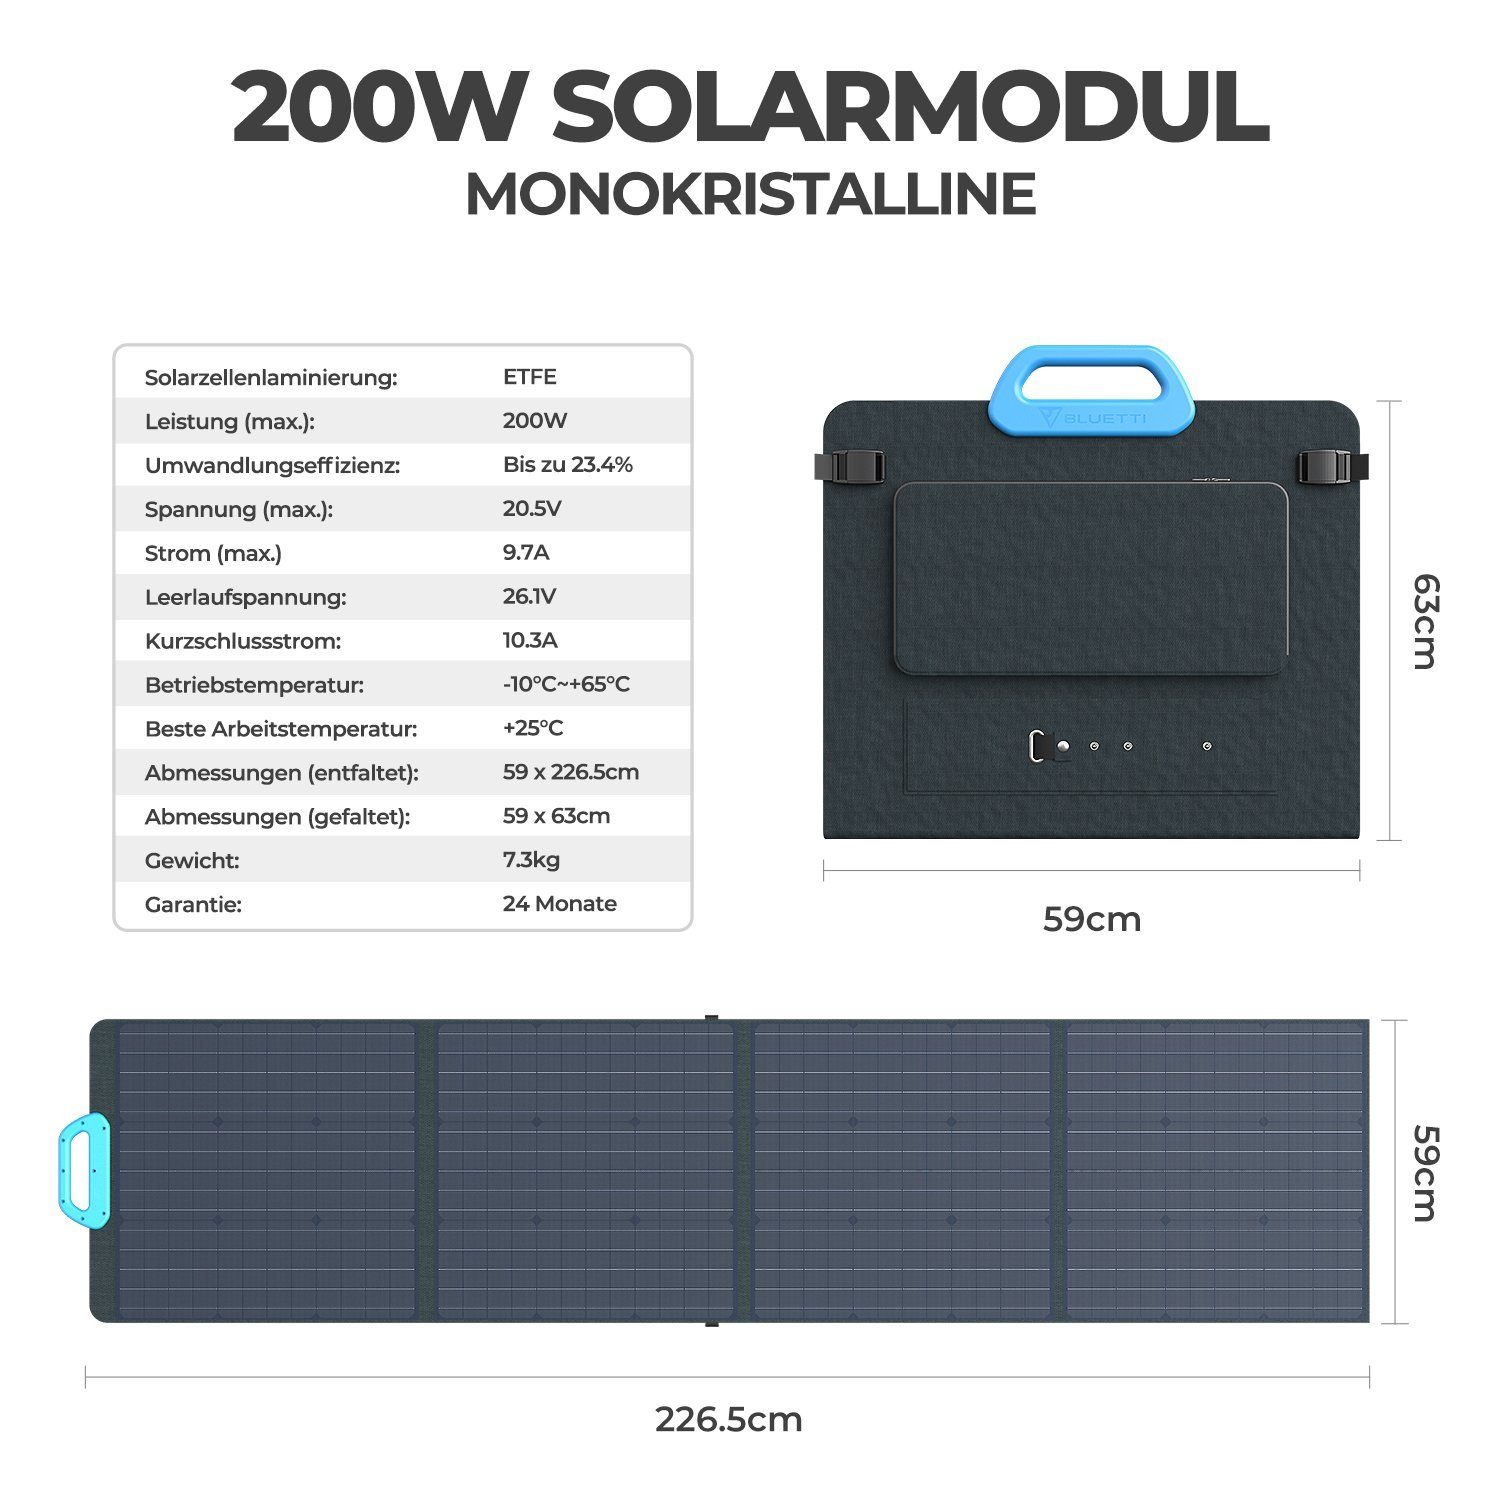 BLUETTI Solaranlage PV200 Solarpanel, IP65 Schutz 200,00 MONOKRISTALLIN, W